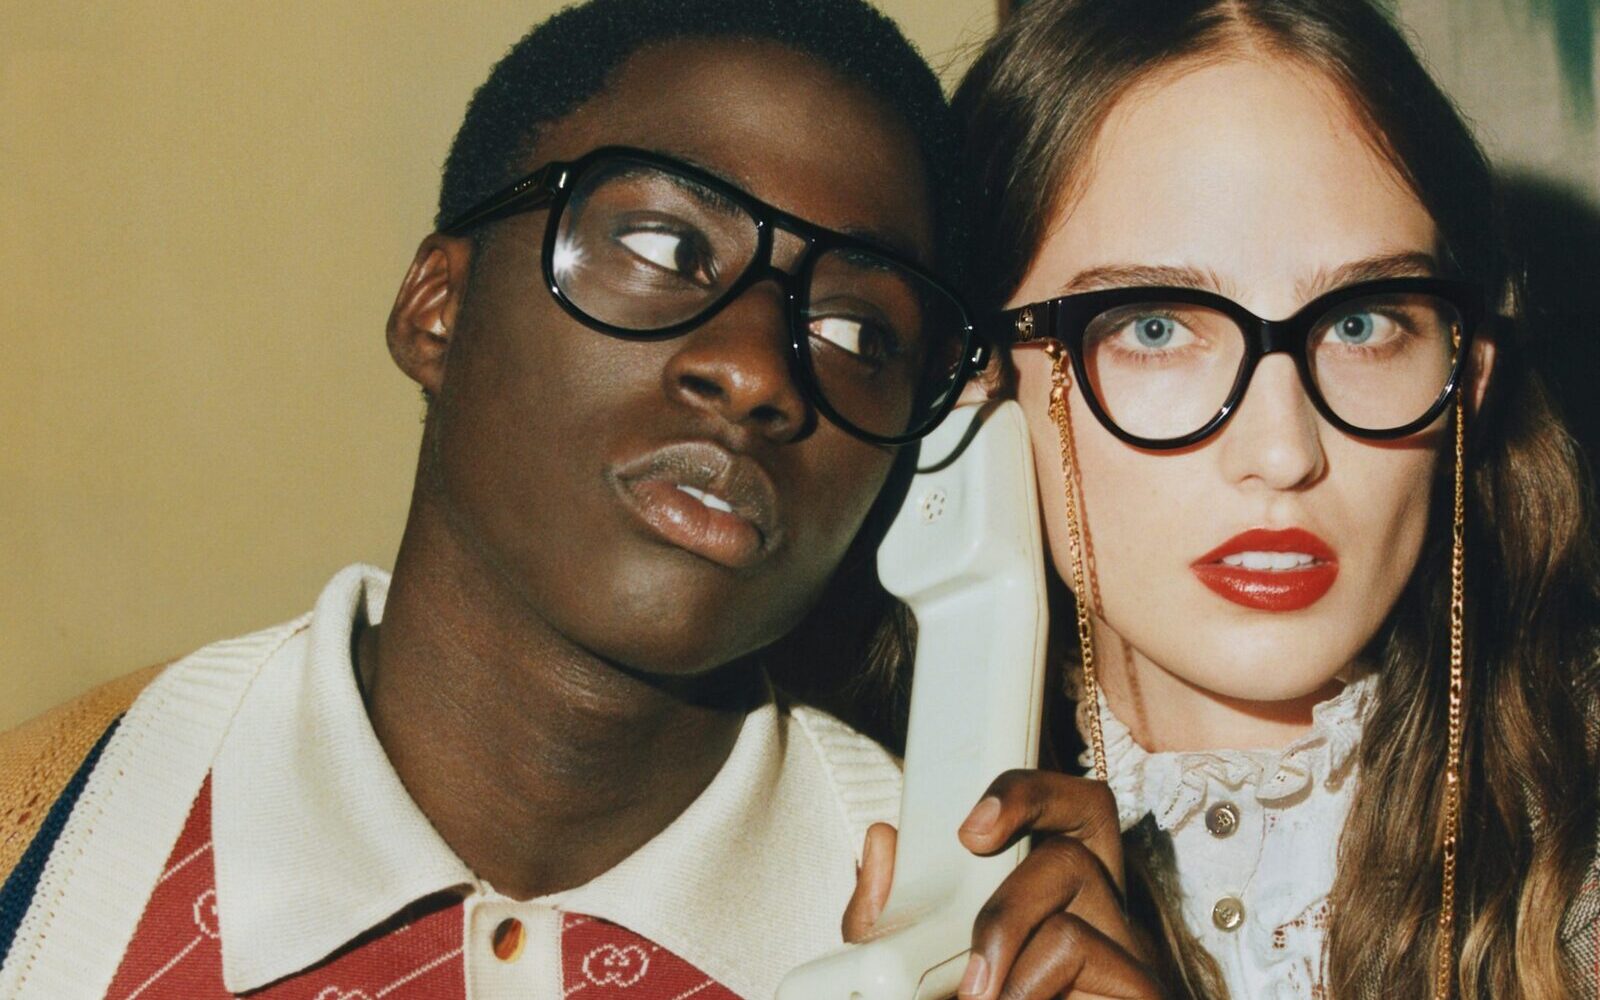 How Bottega Veneta became the must-have eyewear brand for